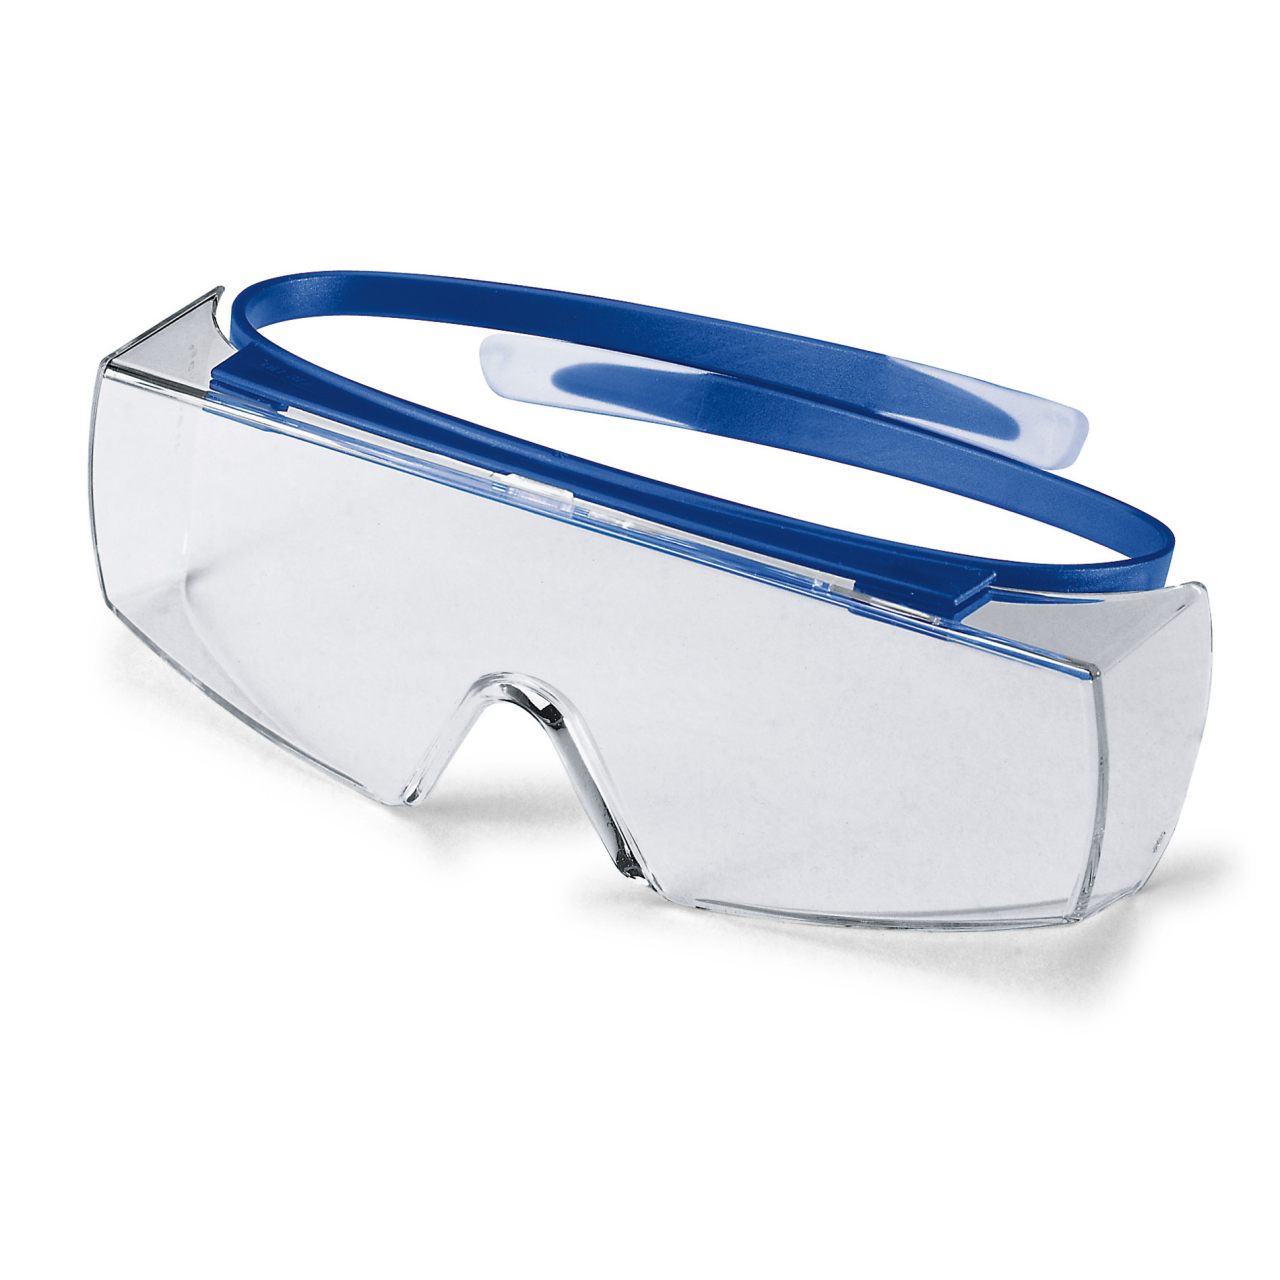 Uvex Super Otg Spectacles Safety Glasses Uvex Safety